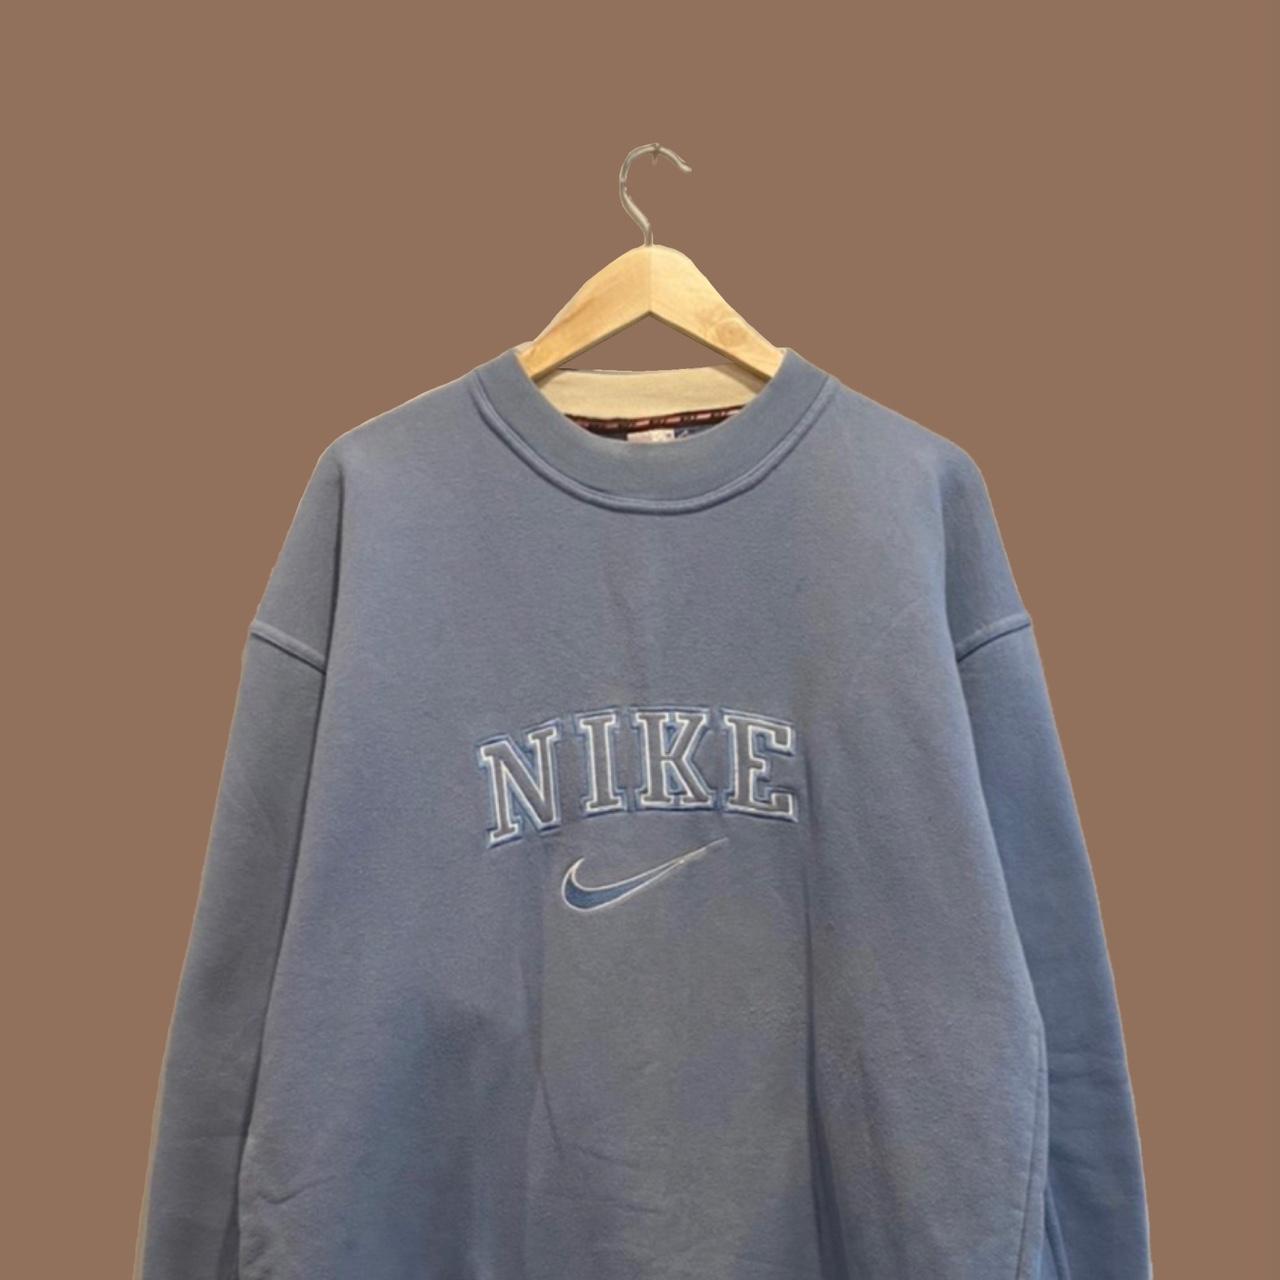 Vintage “Chanel” Spellout Sweater No label - Depop